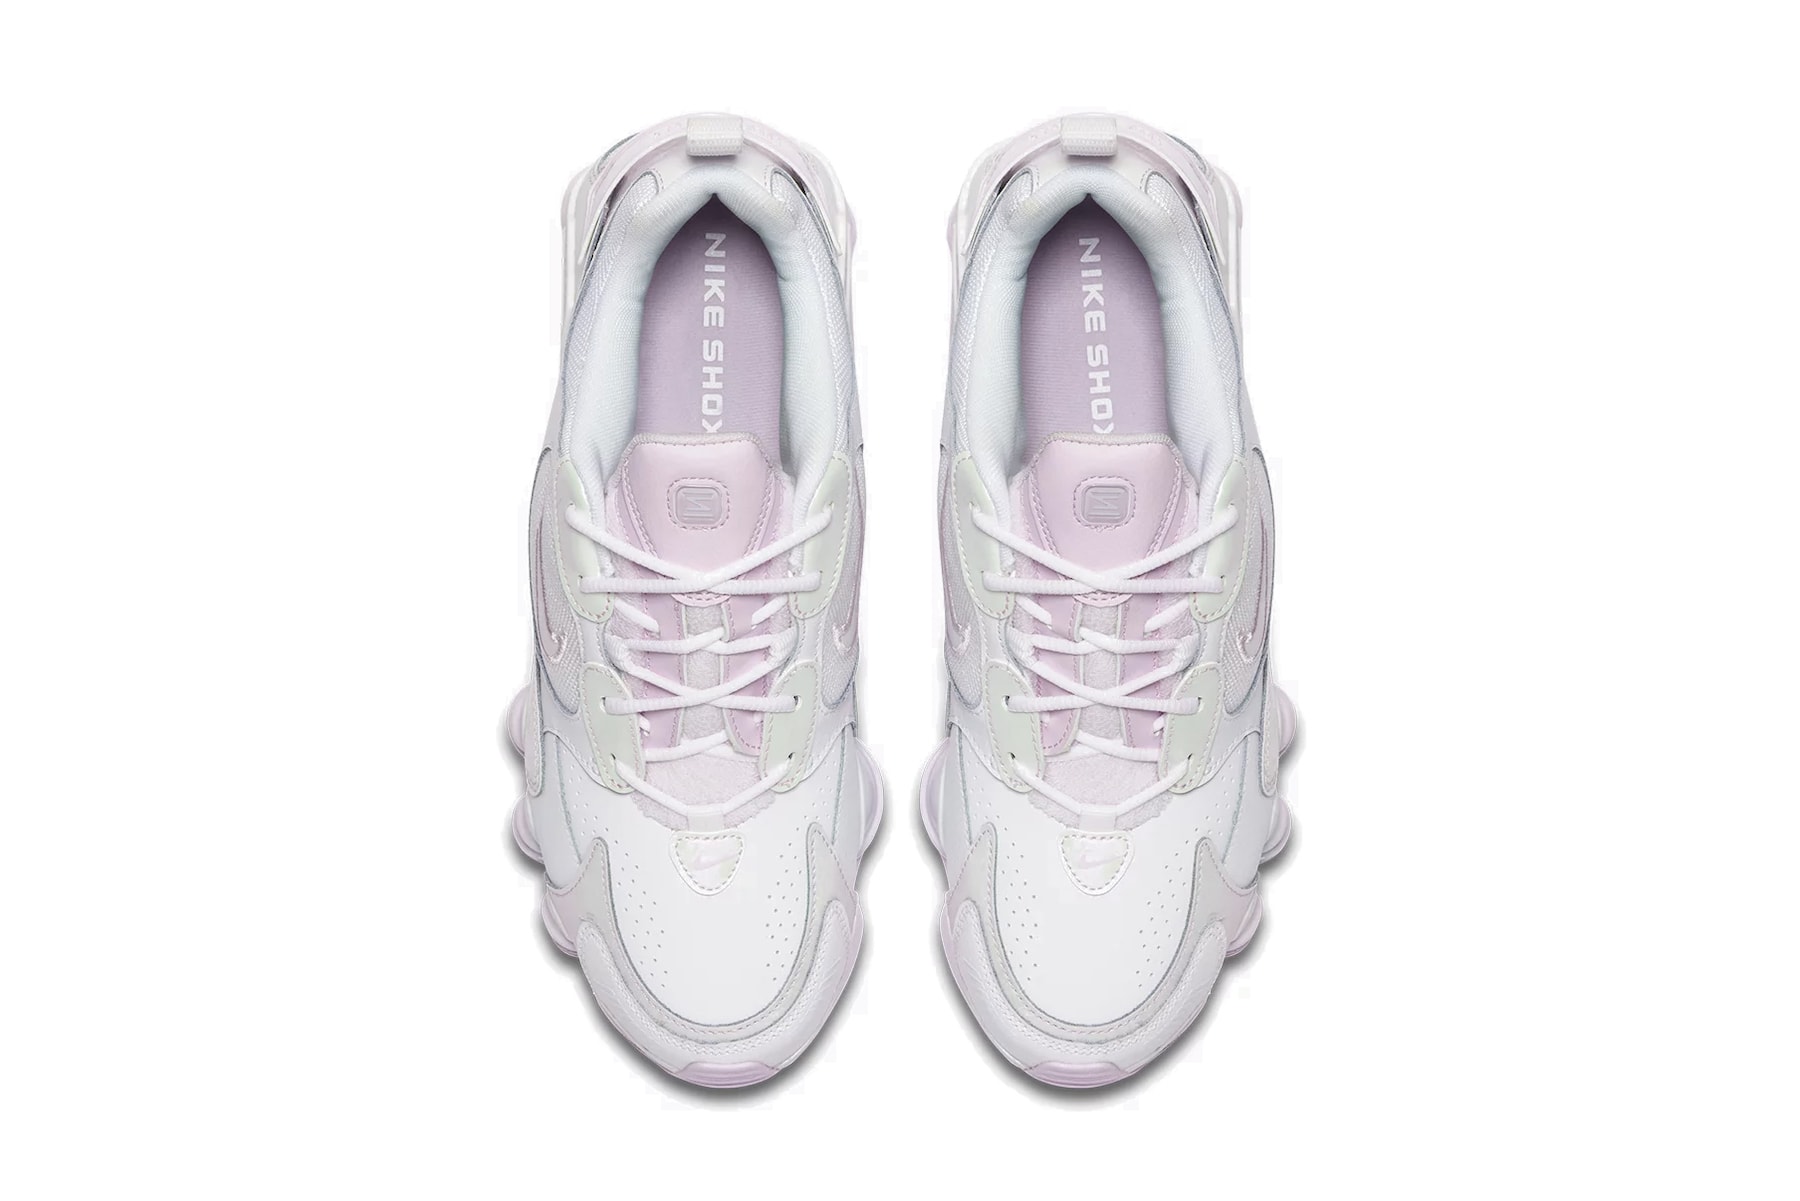 Nike Shox TL Nova "Barely Grape/White" Sneaker